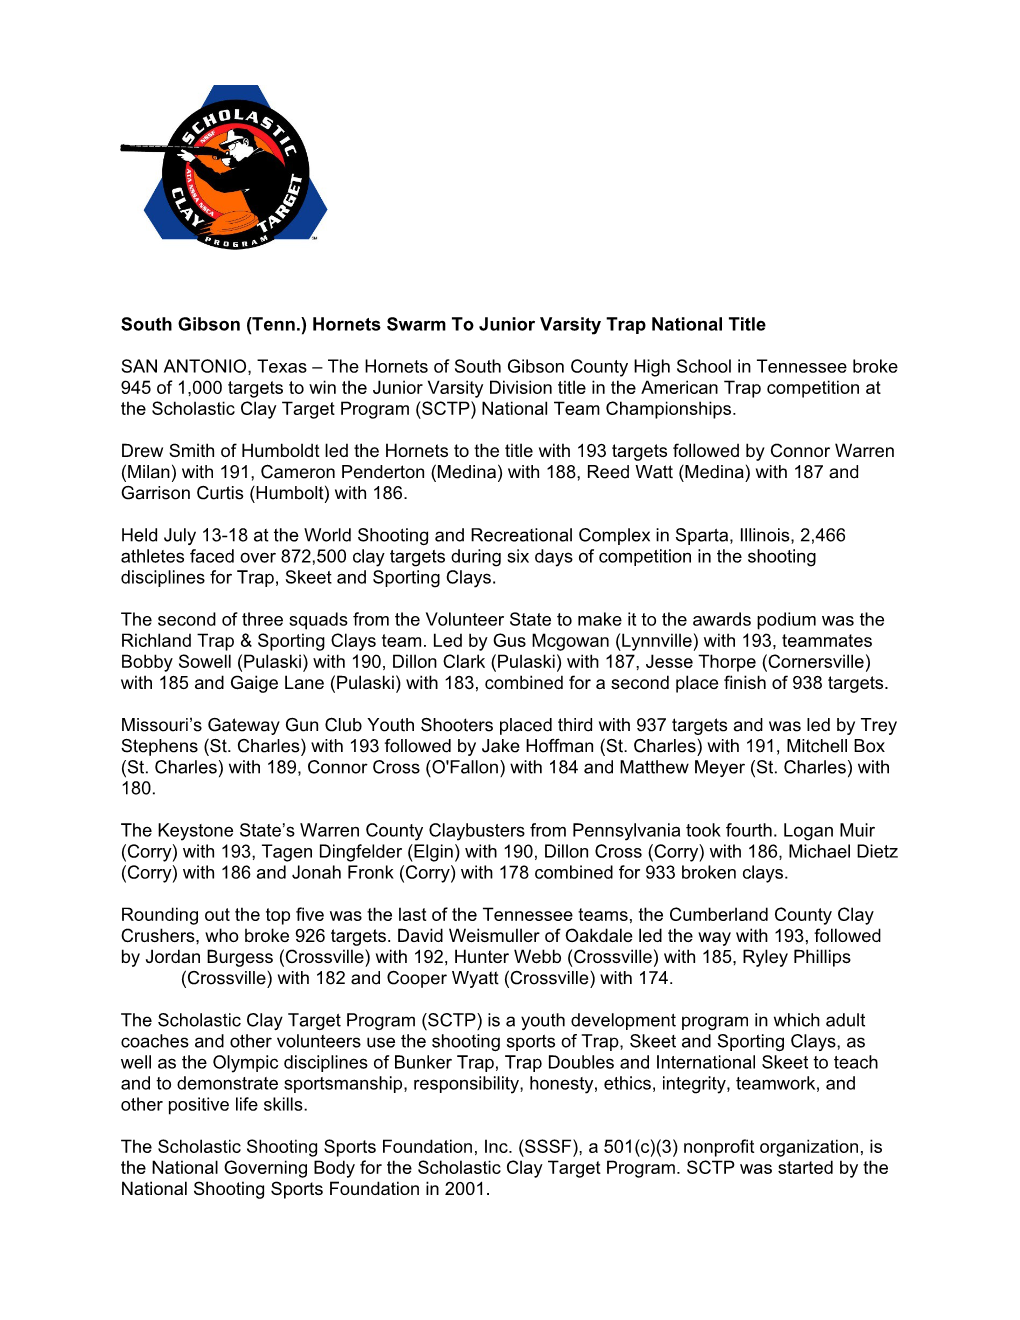 South Gibson (Tenn.) Hornets Swarm to Junior Varsity Trap National Title